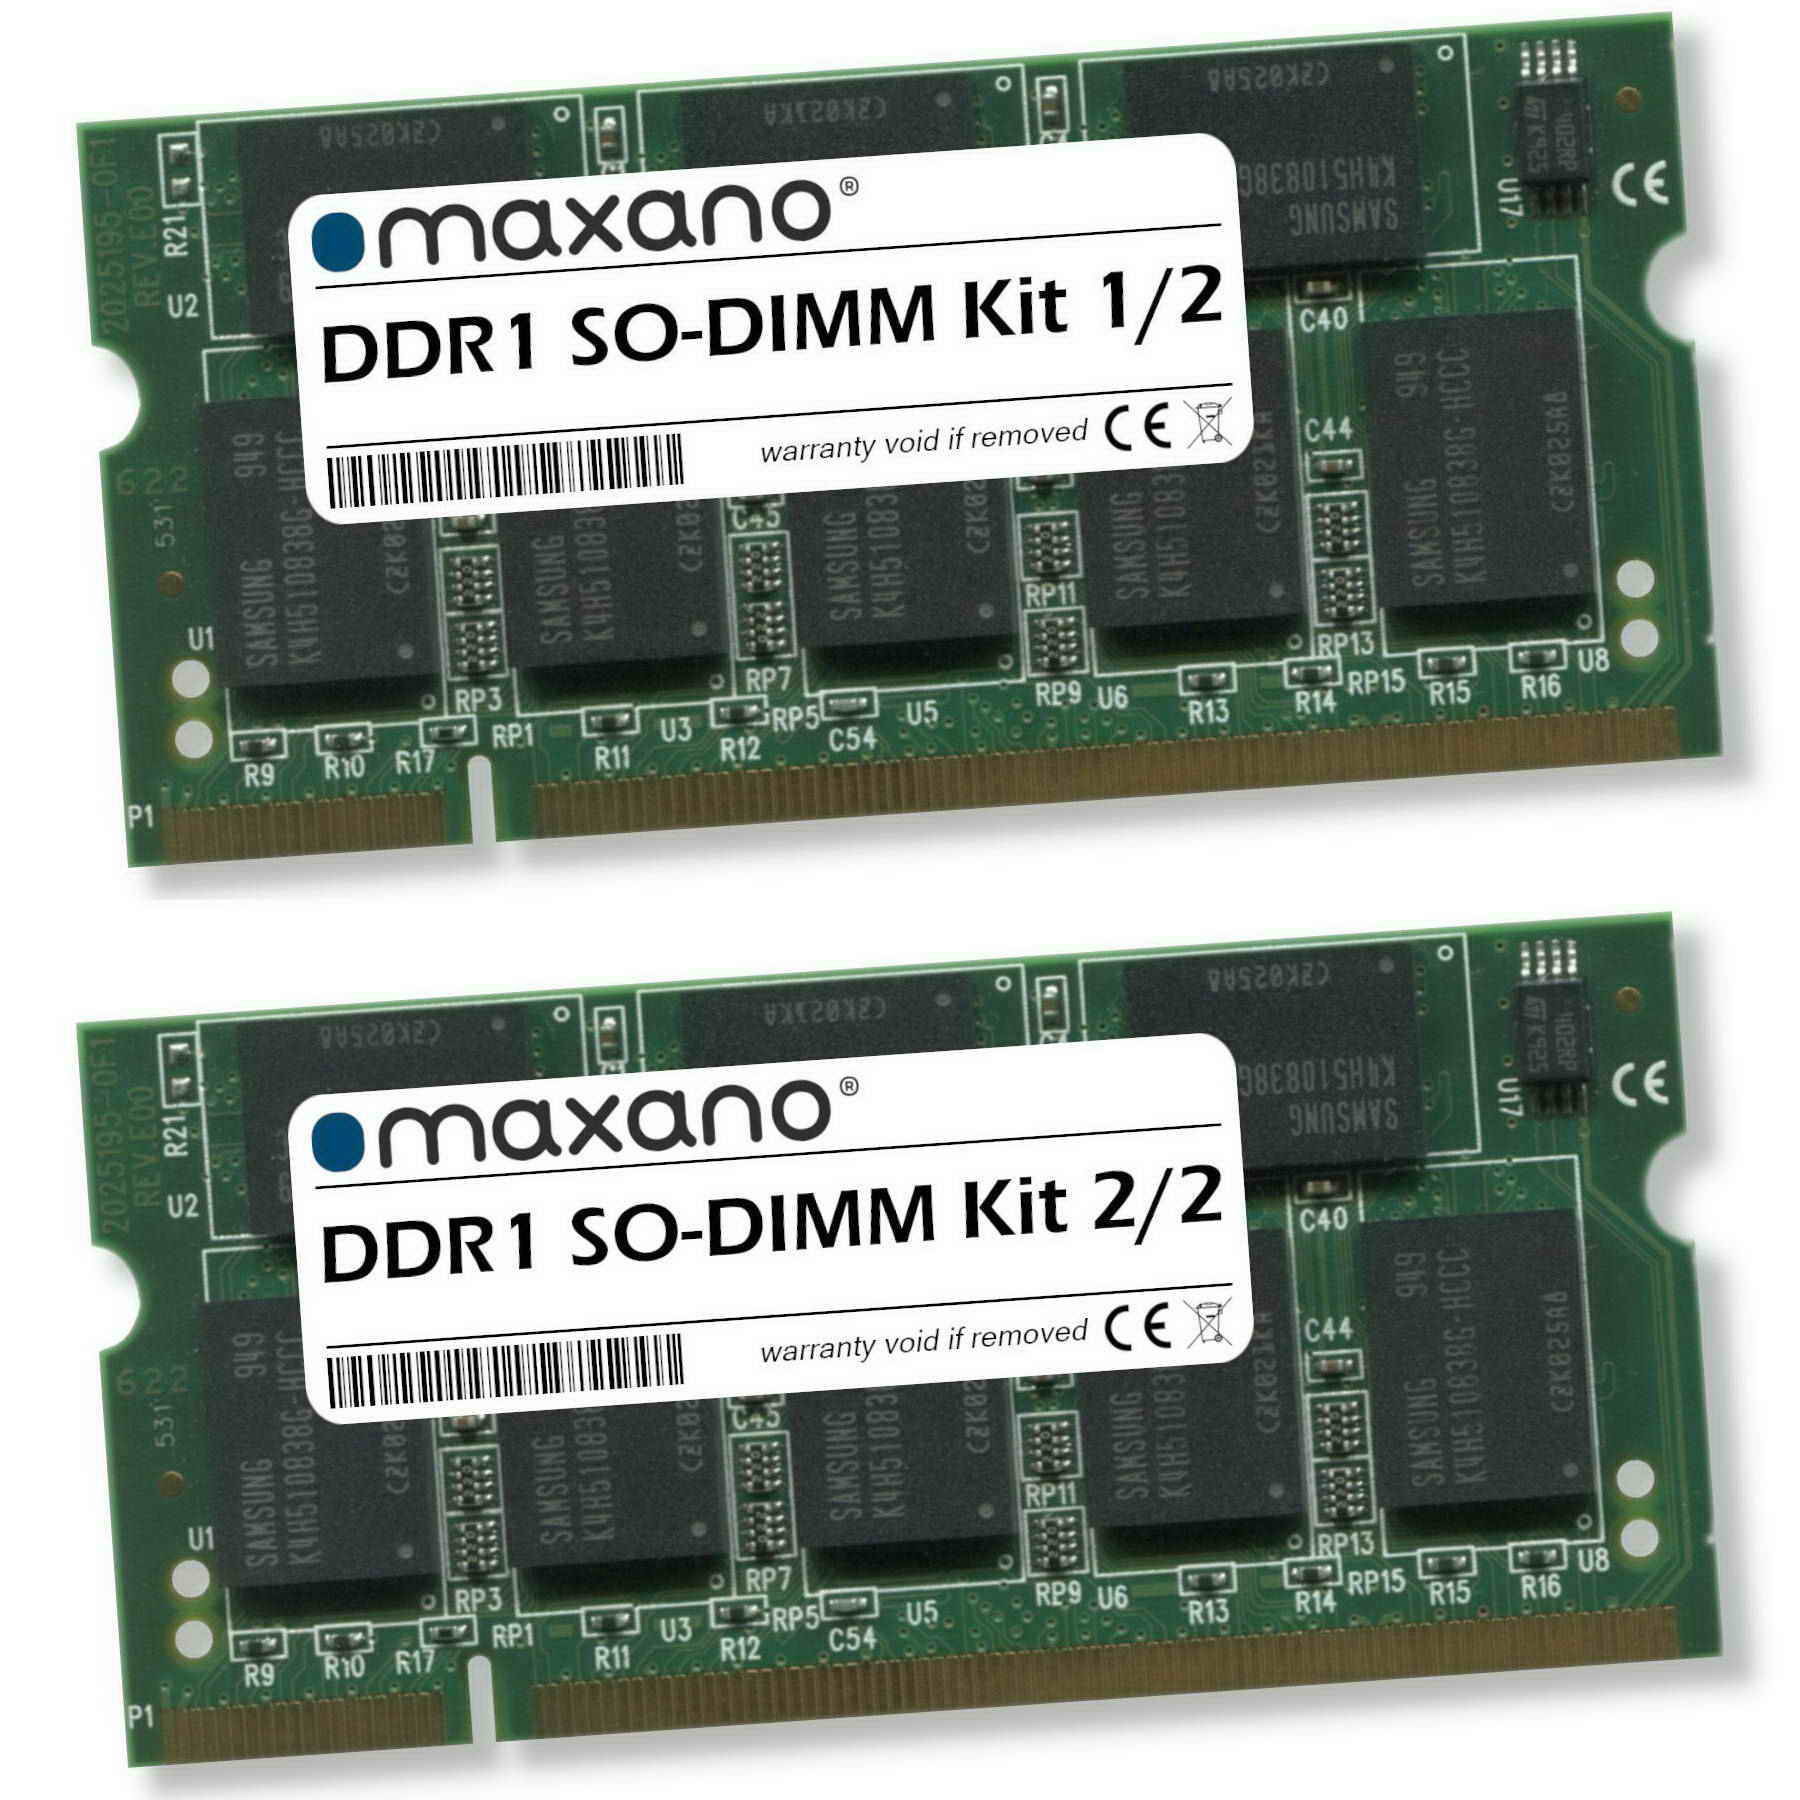 MAXANO HP RAM Kit nx6110 GB HPE 1GB SDRAM / Compaq 2x 2 2GB für SO-DIMM) Arbeitsspeicher (PC-2700